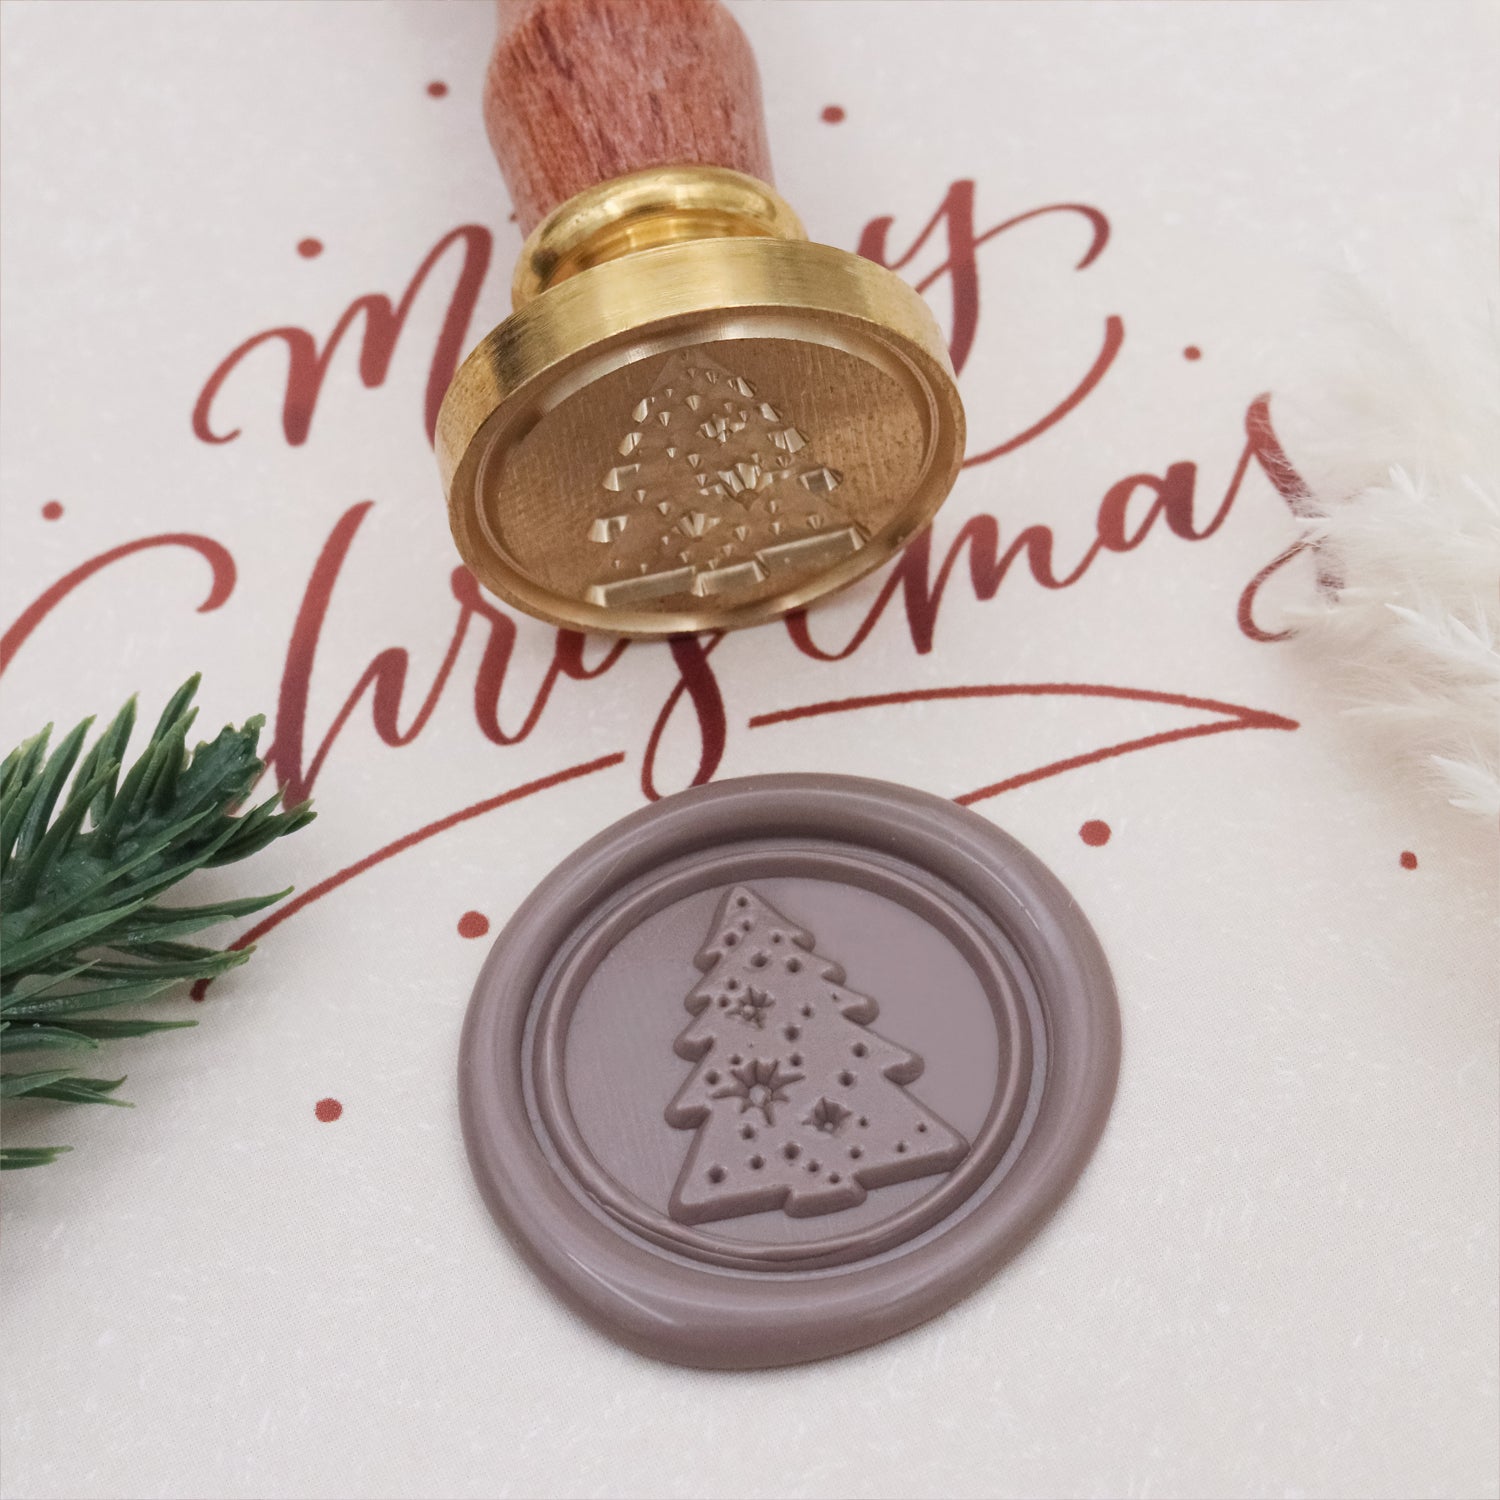 Merry Christmas Wax Seals